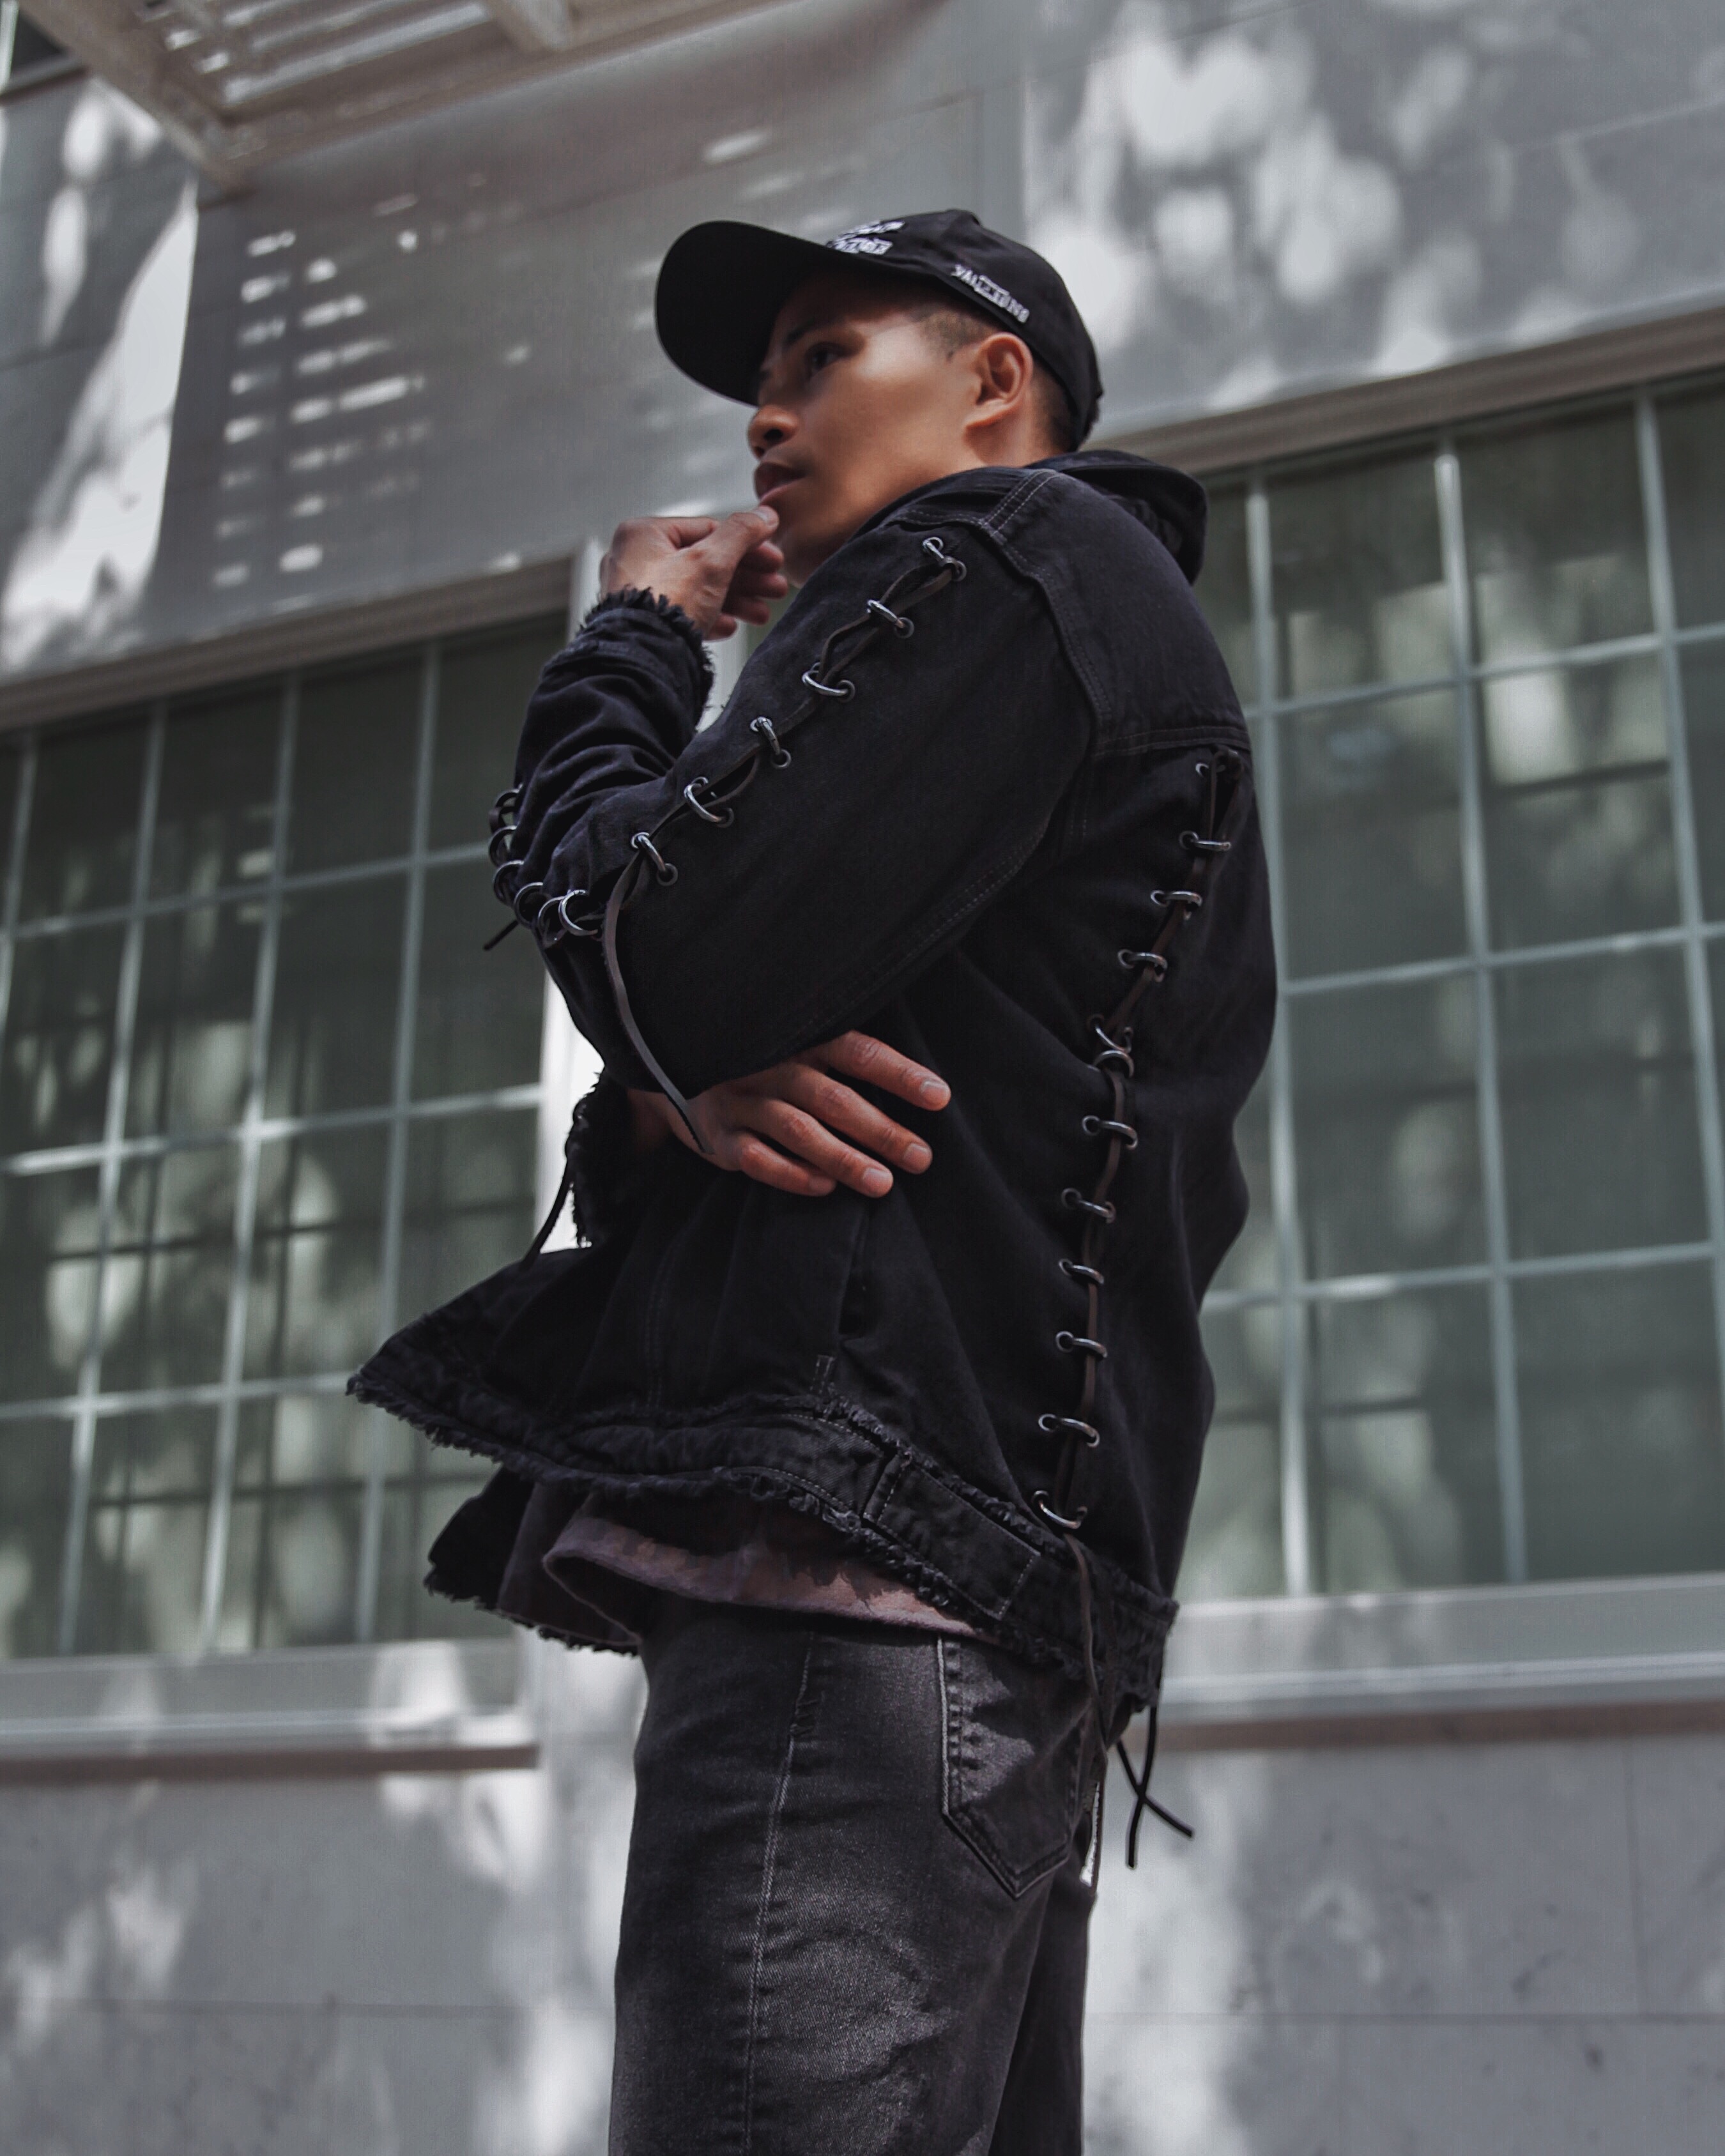 hm trend denim jacket with metal rings streetwear street style blogger